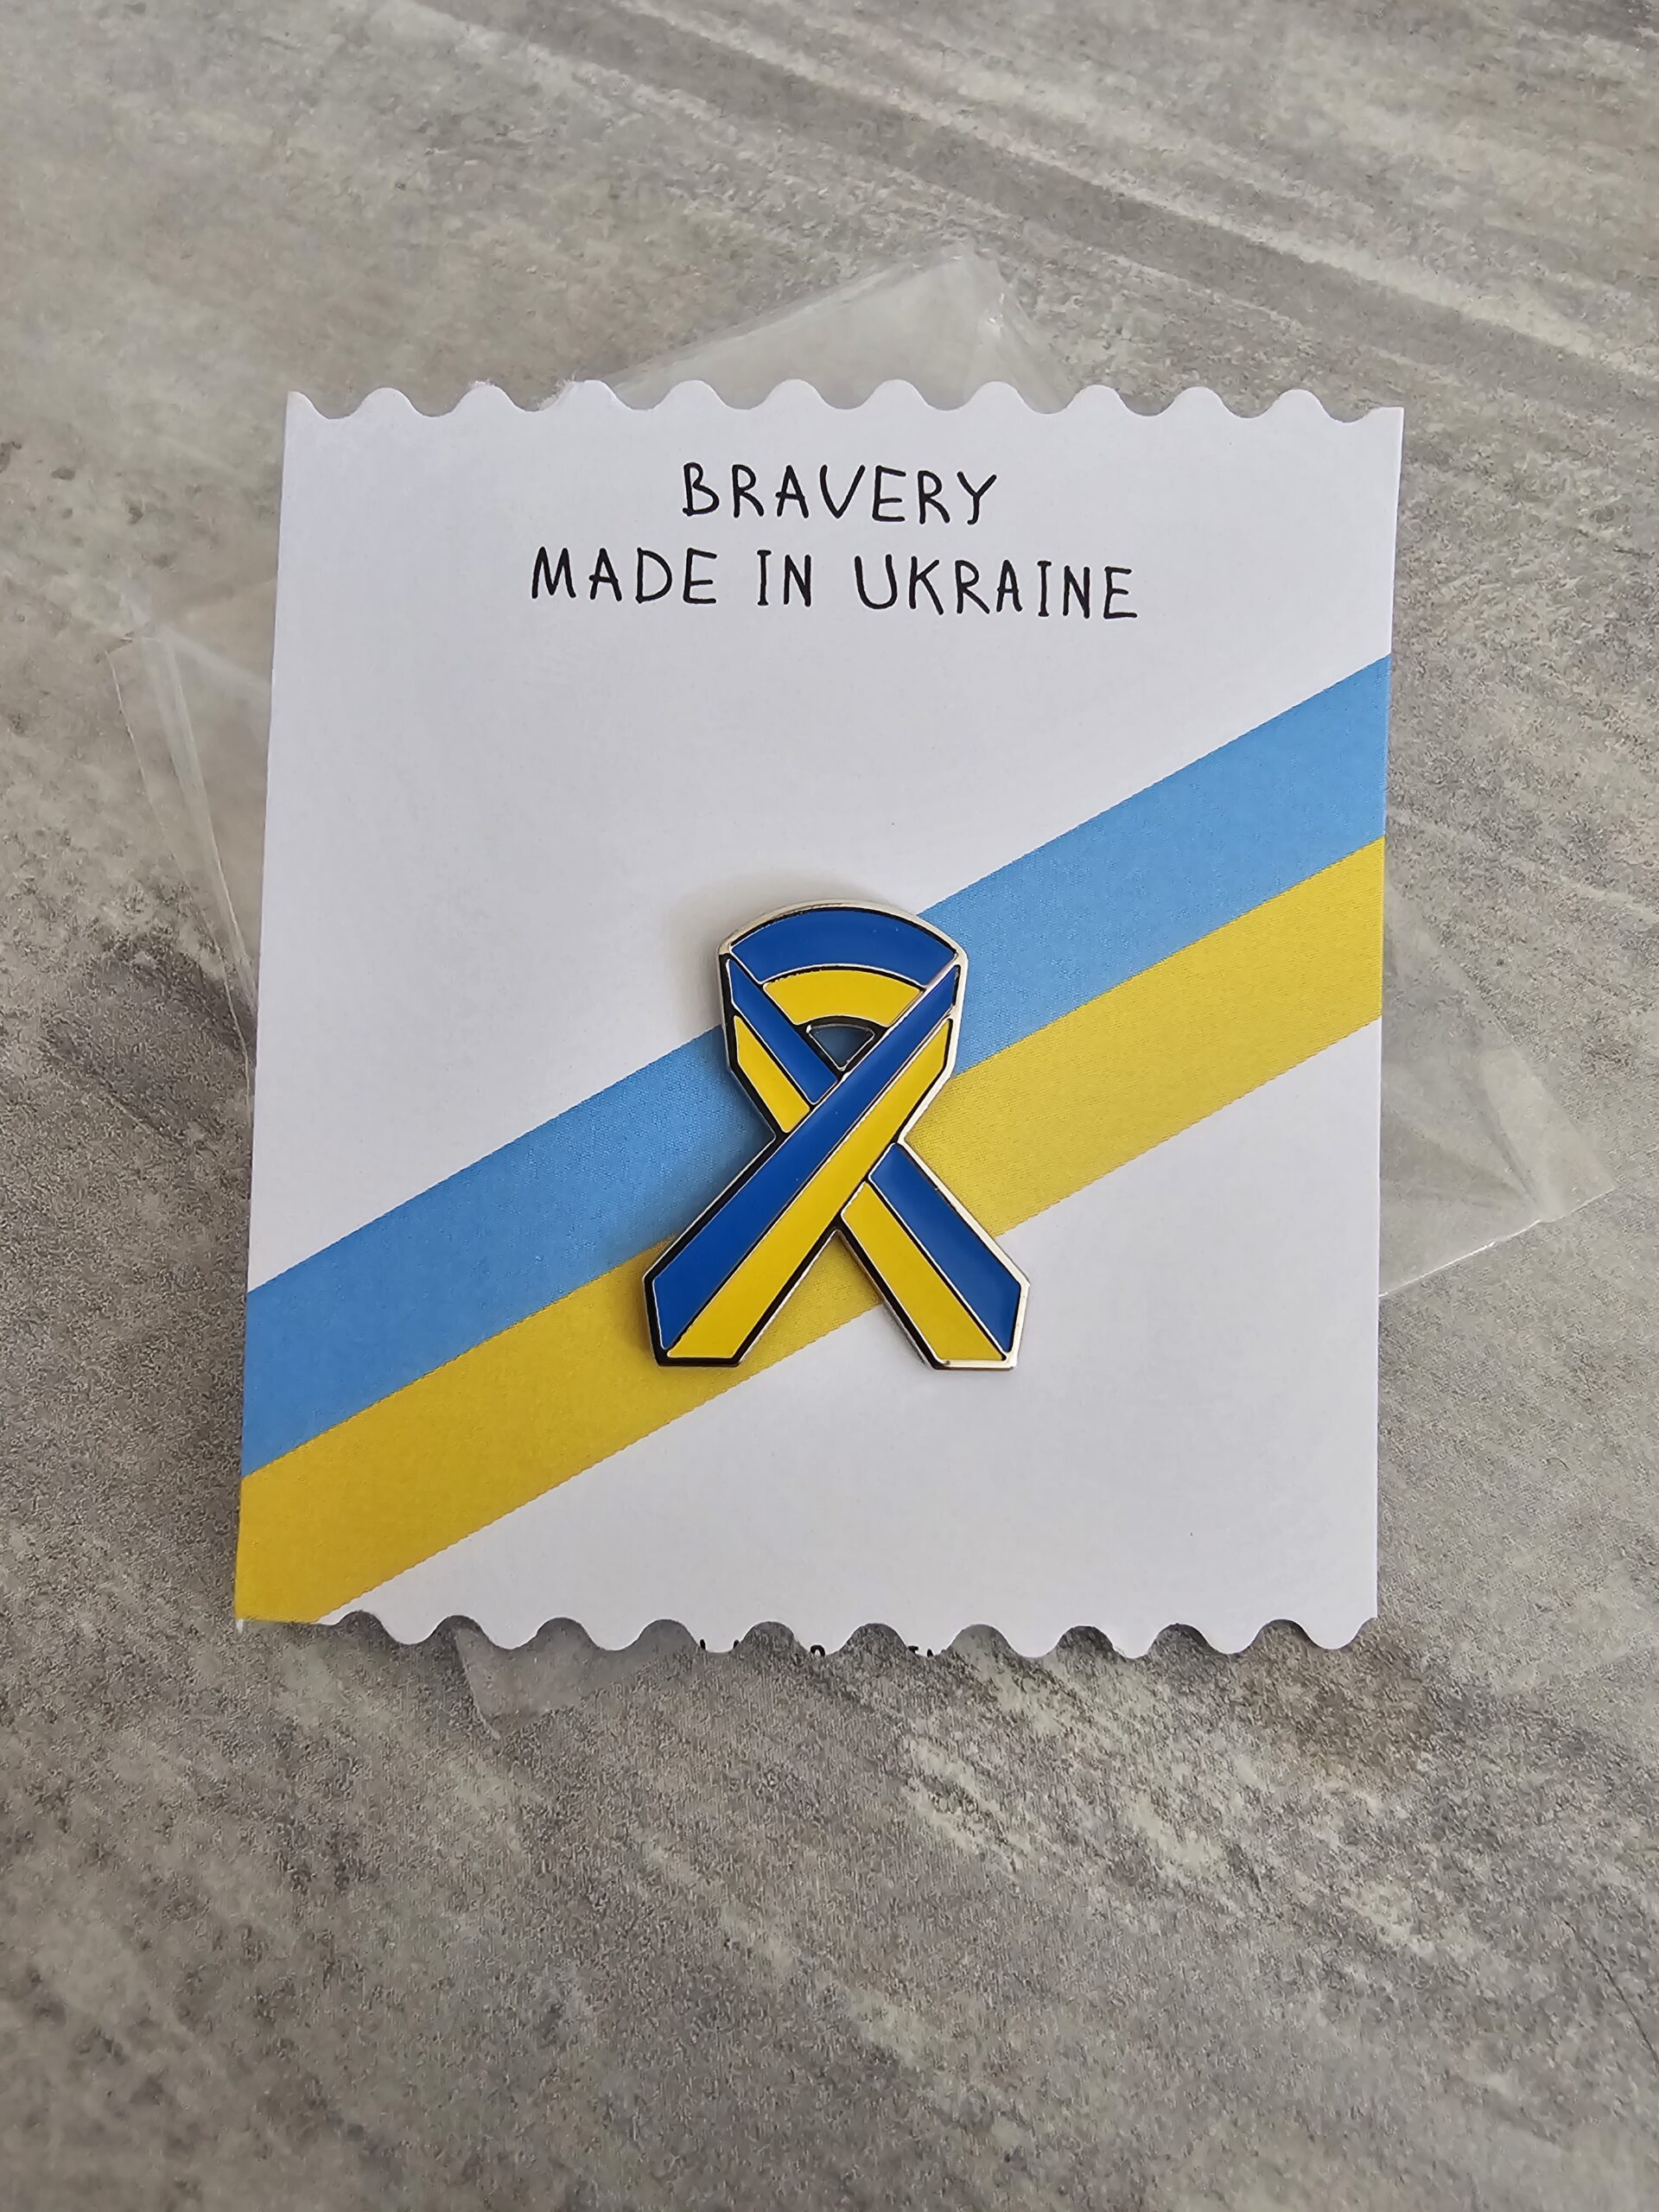 Bravery made in Ukraine